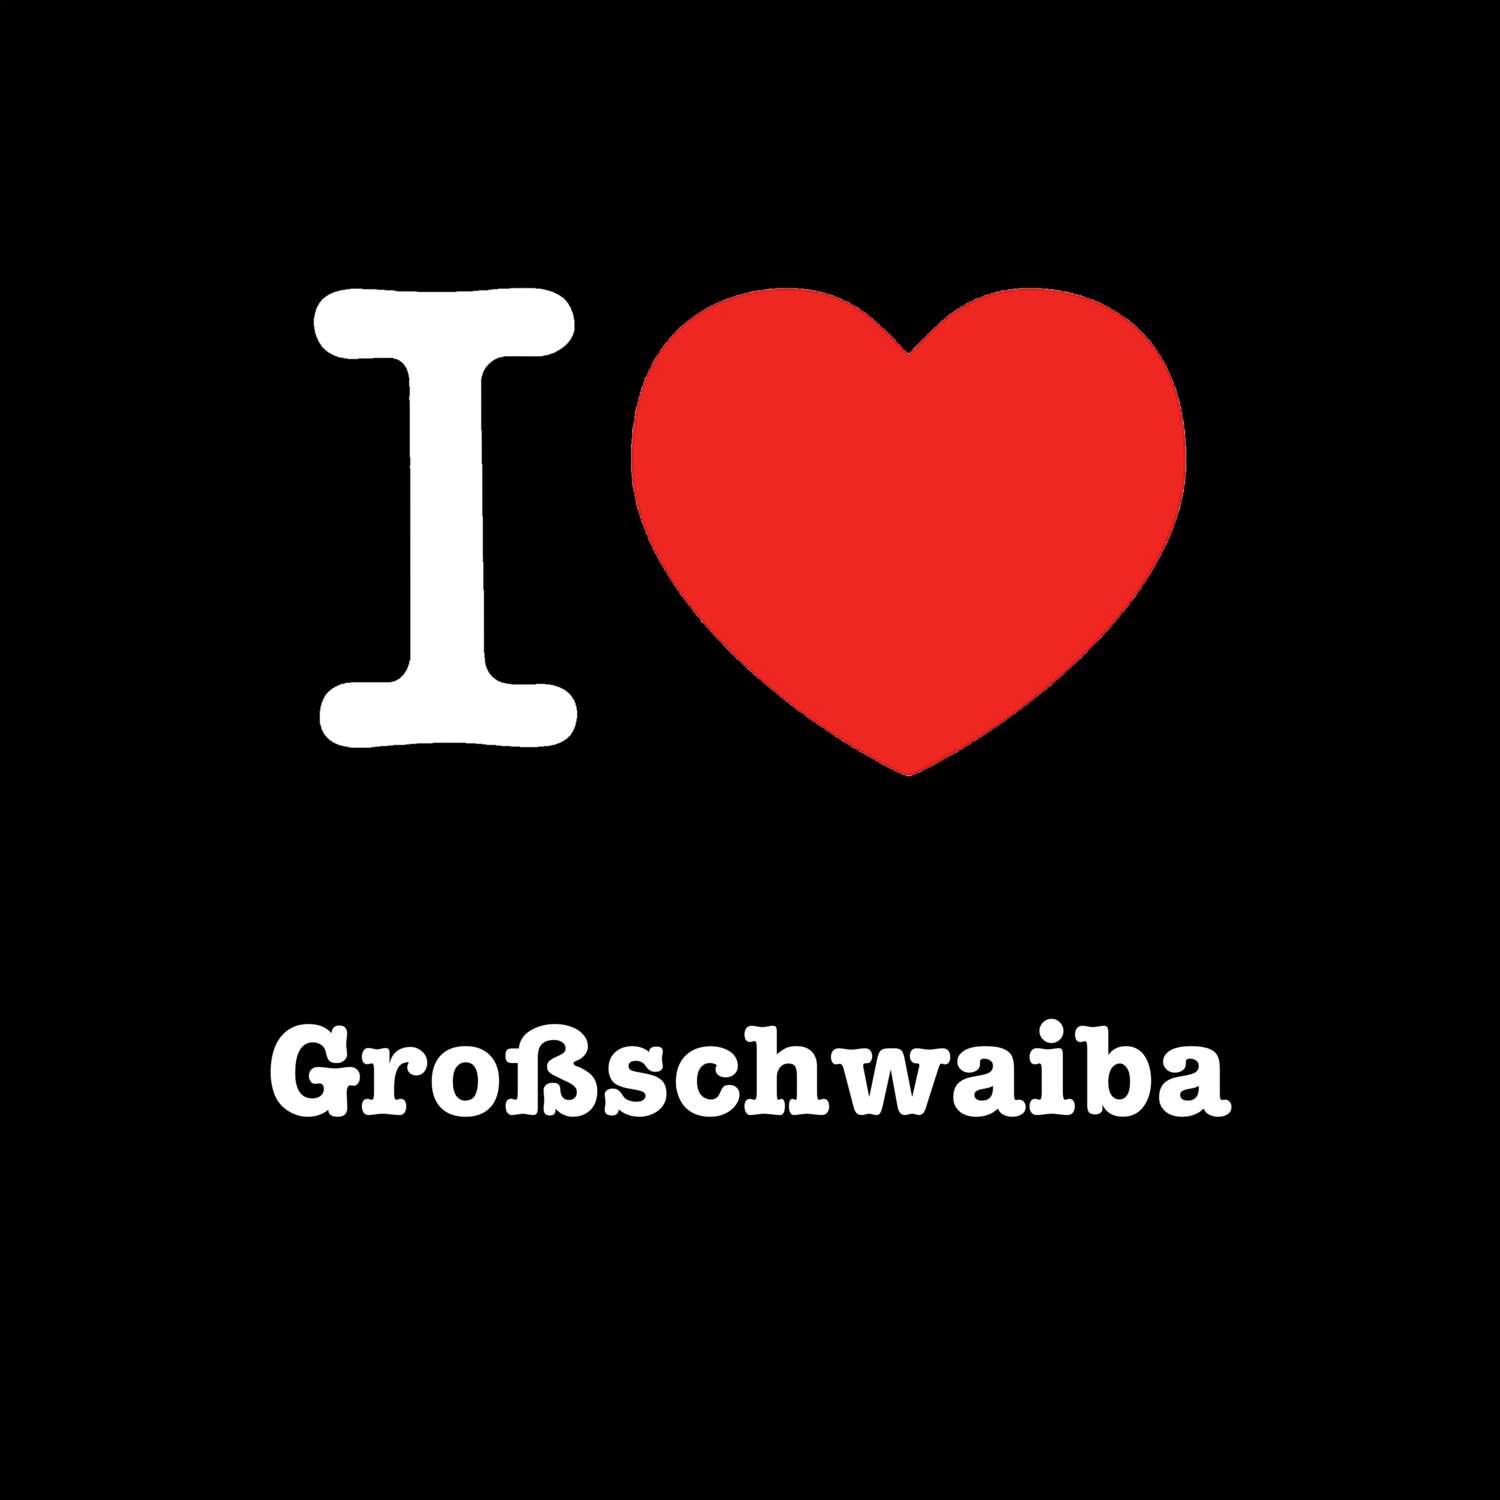 Großschwaiba T-Shirt »I love«